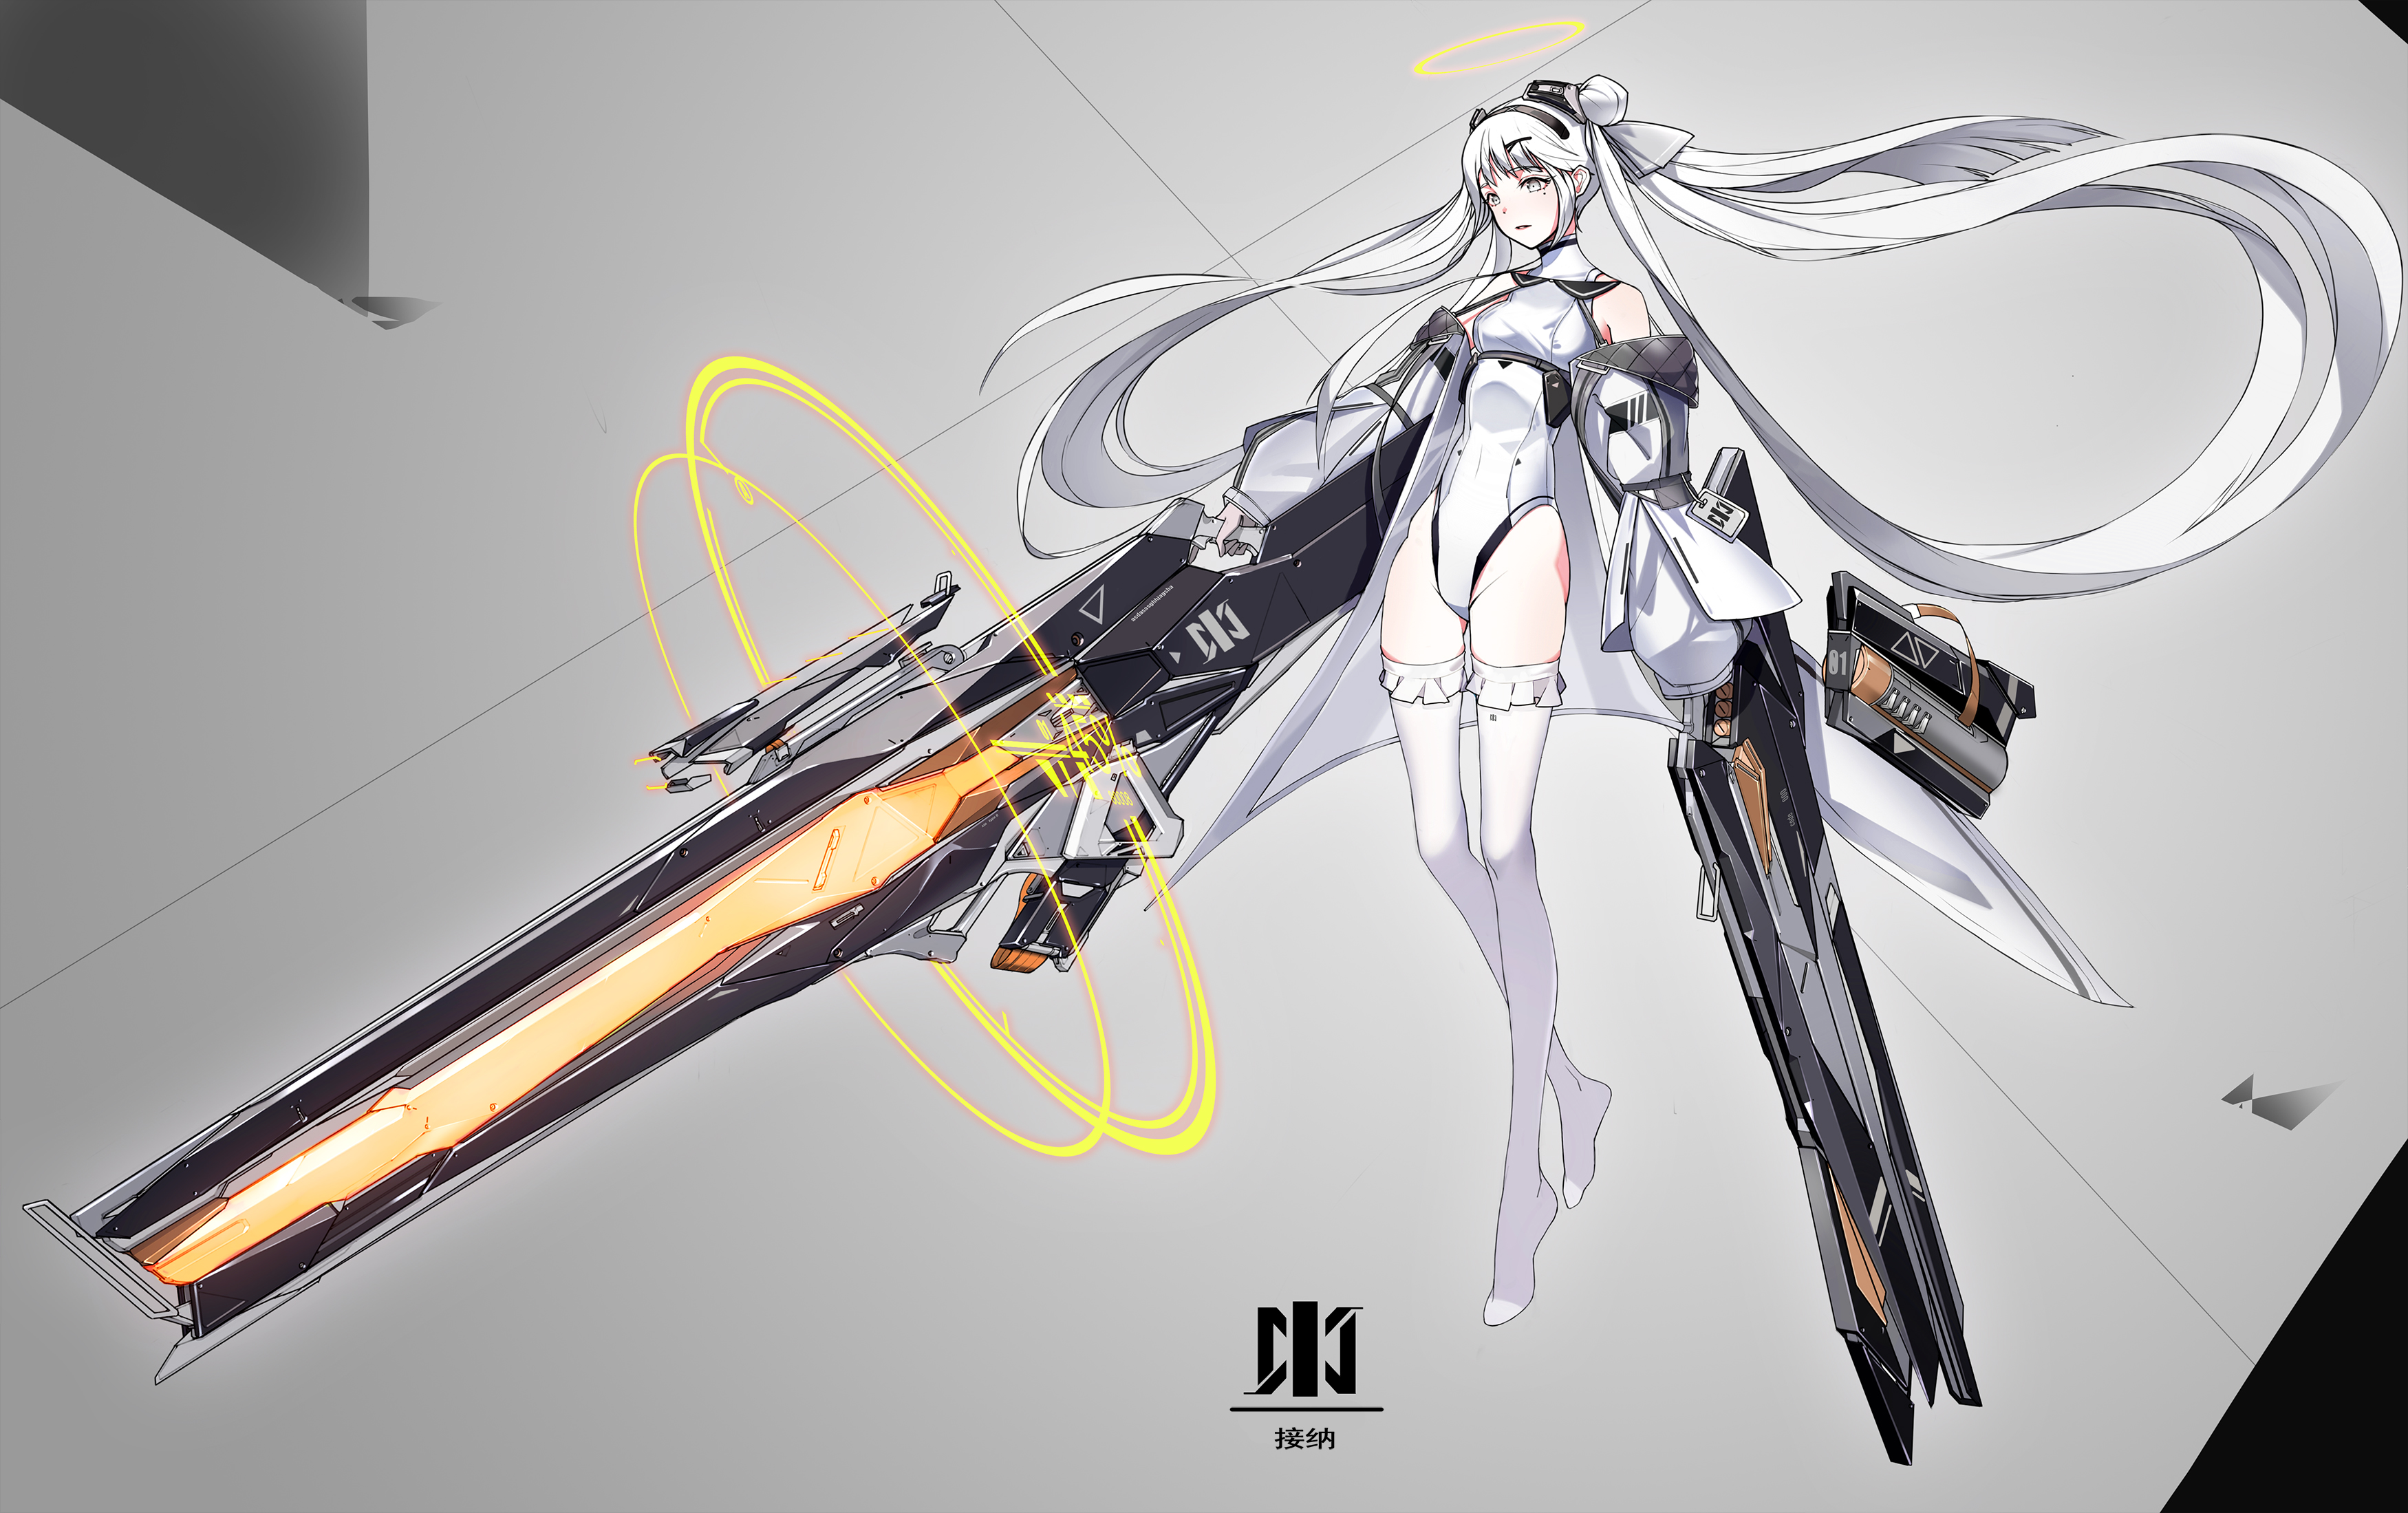 Anime 3500x2199 anime anime girls girls with guns science fiction Xin (artist) women Futuristic Weapons